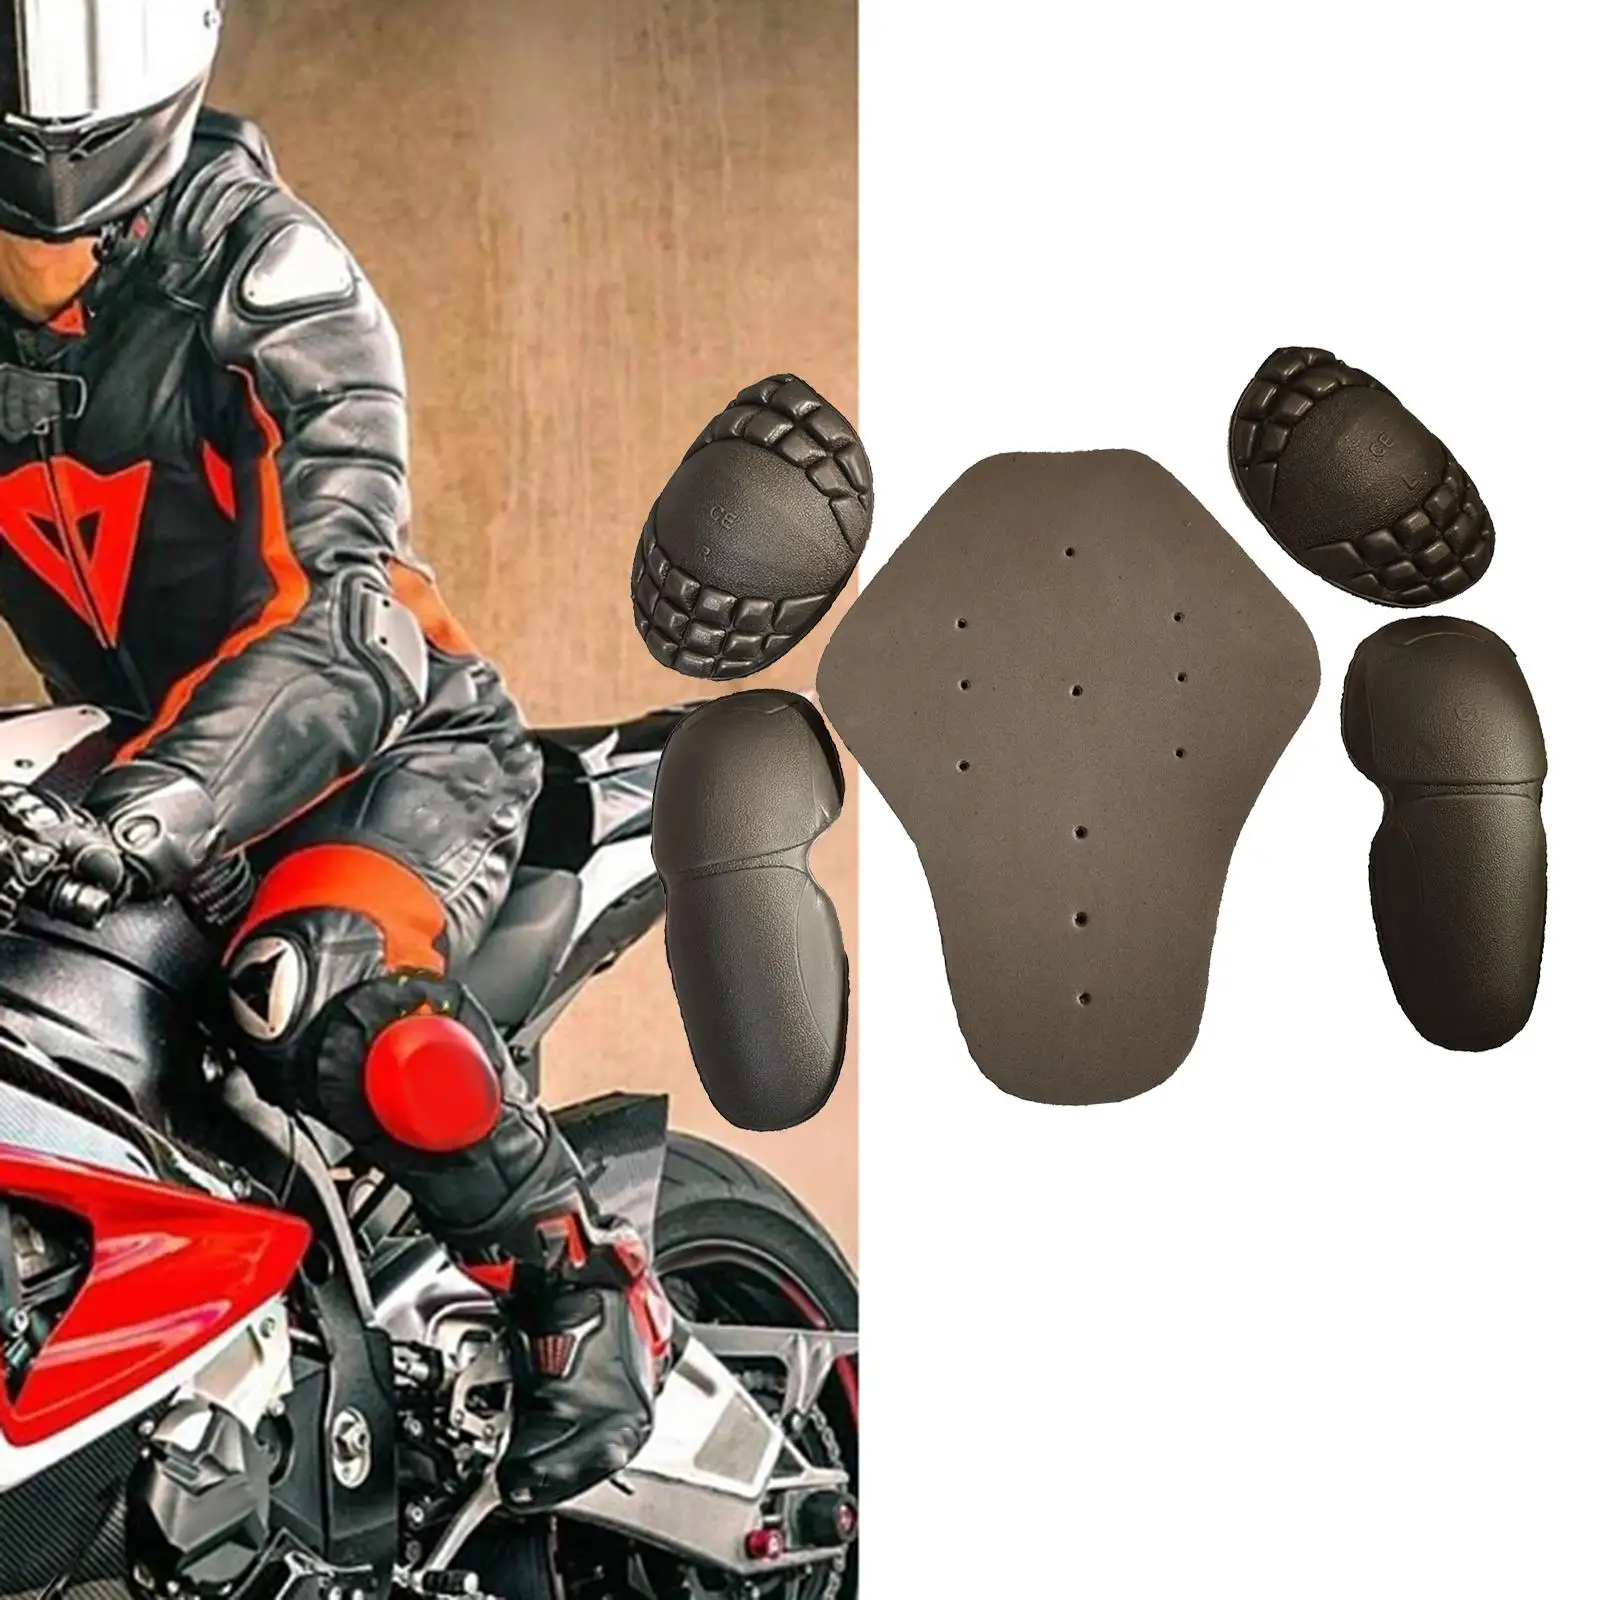 5x Motorbike Body Protective Gear Comfortable EVA Insert Protector Set Breathable for Motocross Biker Biking Cycling Sport